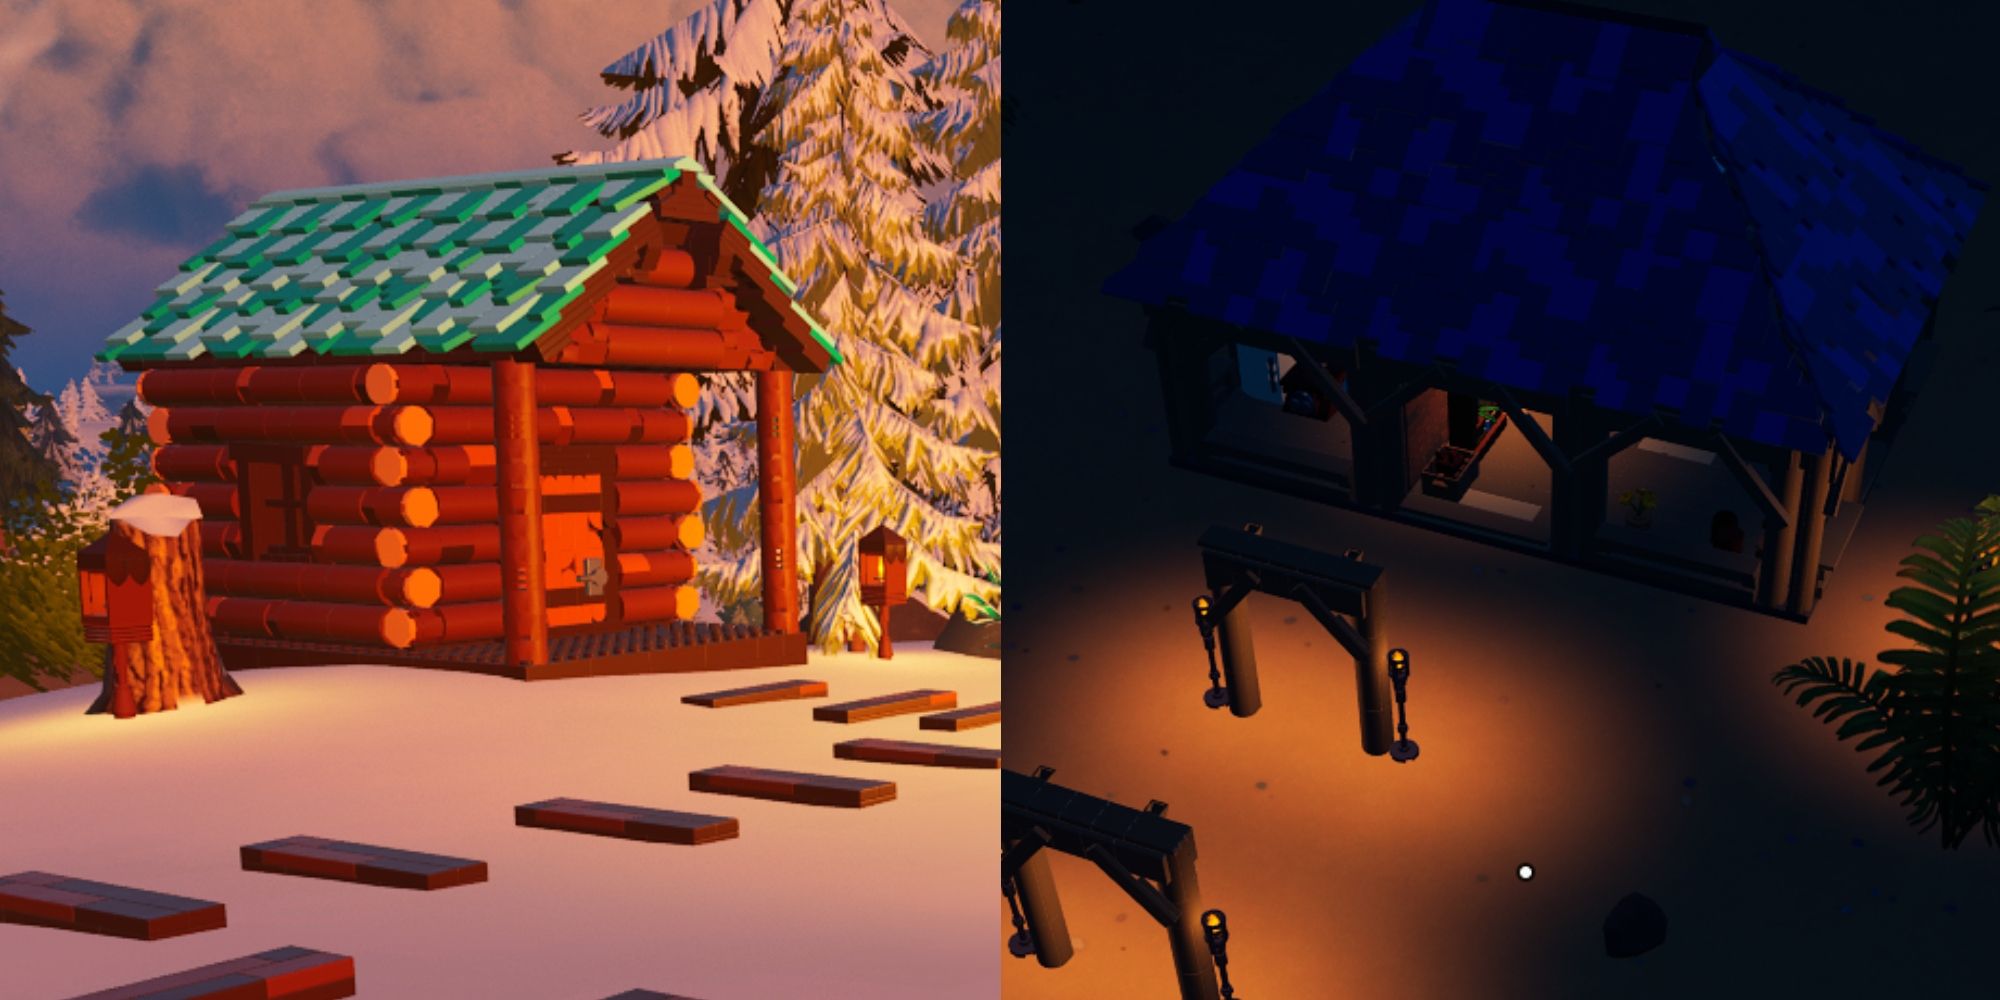 Lego Fortnite log cabin in frostlands and pavillion at night